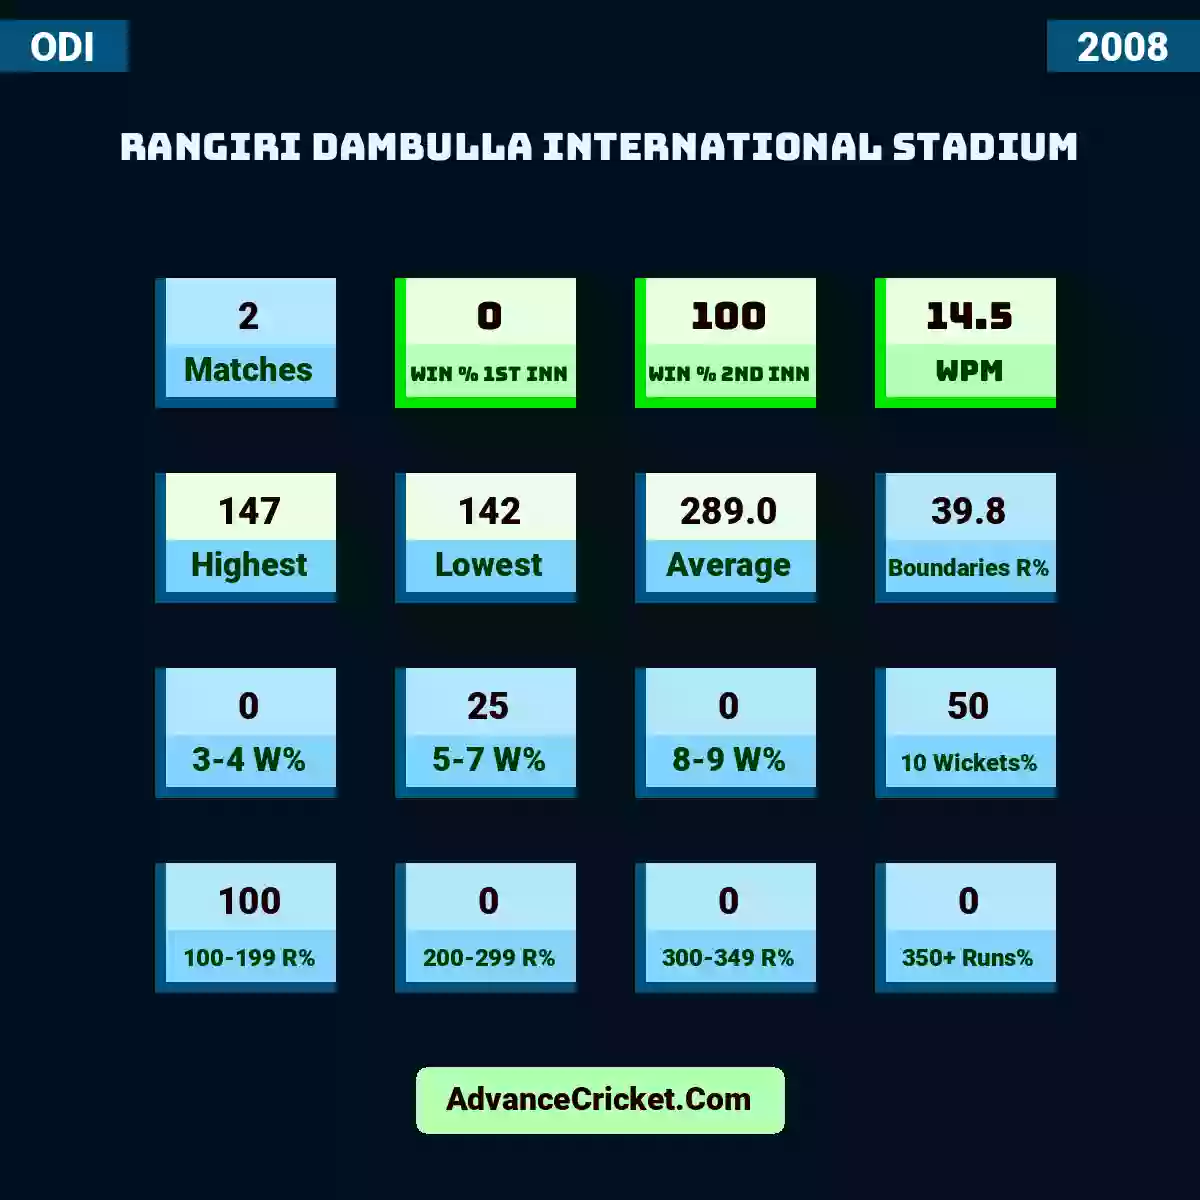 Image showing Rangiri Dambulla International Stadium with Matches: 2, Win % 1st Inn: 0, Win % 2nd Inn: 100, WPM: 14.5, Highest: 147, Lowest: 142, Average: 289.0, Boundaries R%: 39.8, 3-4 W%: 0, 5-7 W%: 25, 8-9 W%: 0, 10 Wickets%: 50, 100-199 R%: 100, 200-299 R%: 0, 300-349 R%: 0, 350+ Runs%: 0.